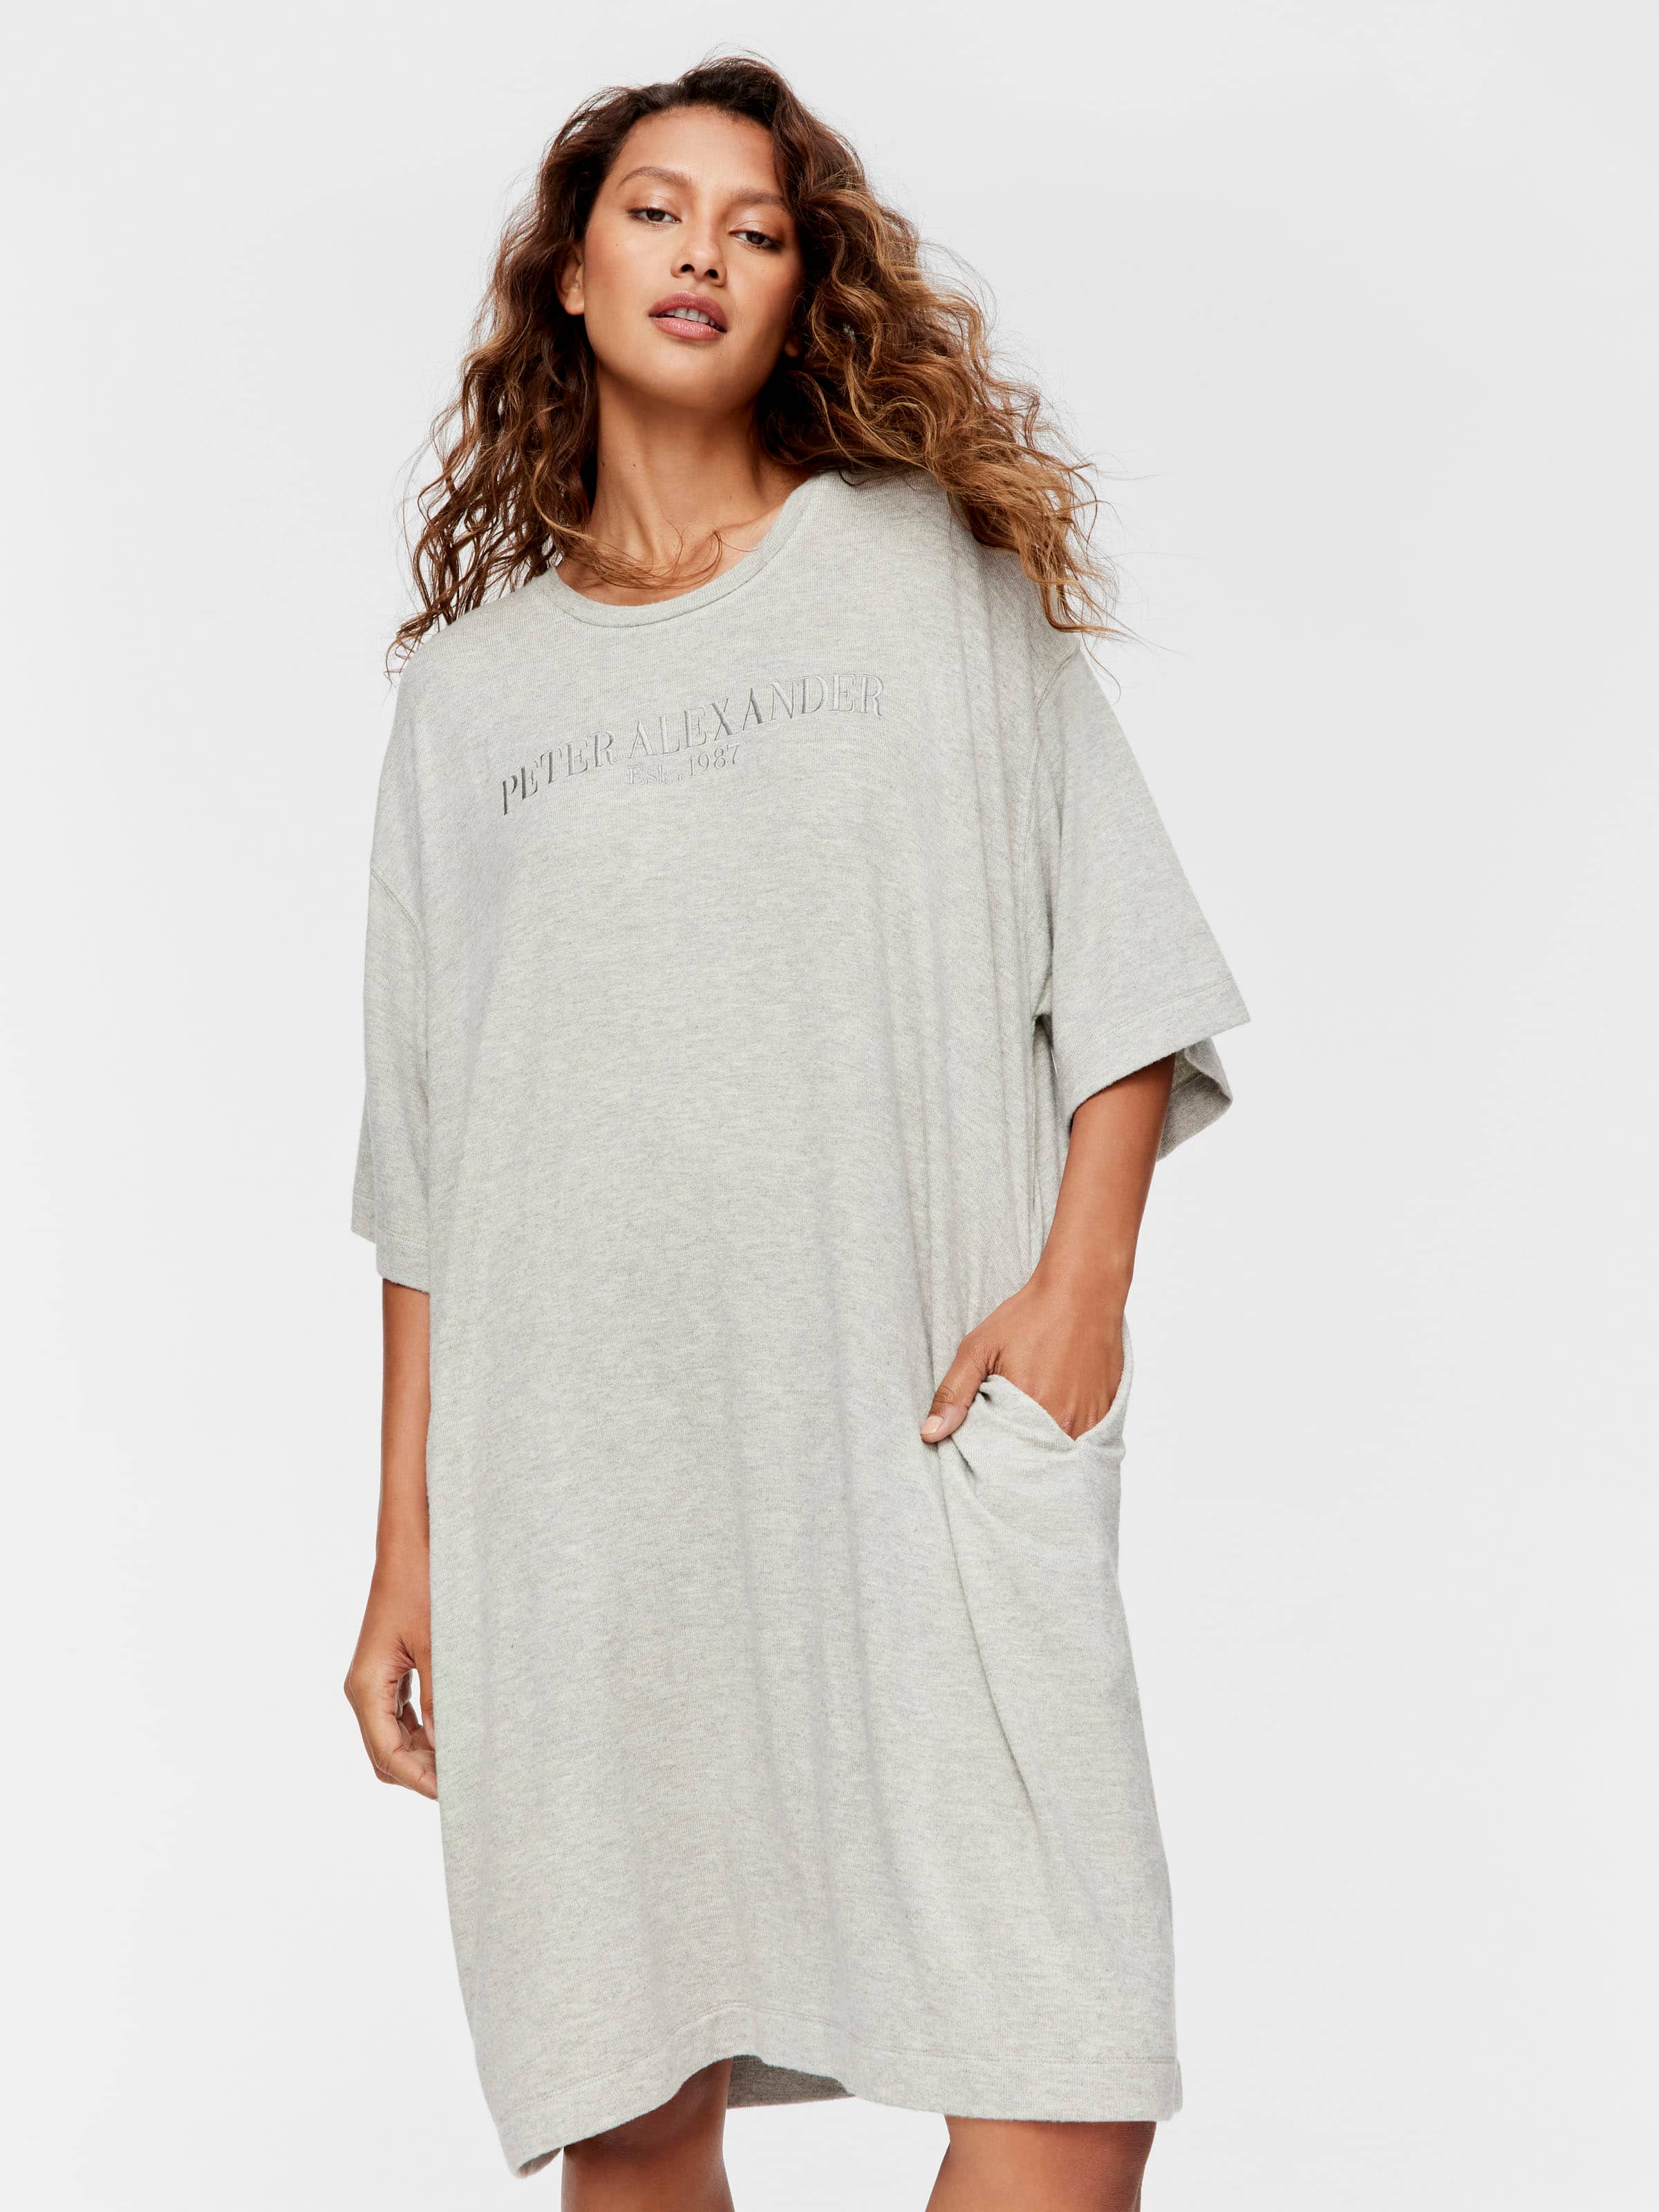 CATALOG CLASSICS Womens Nightgown Henley Night Shirt 100% Cotton